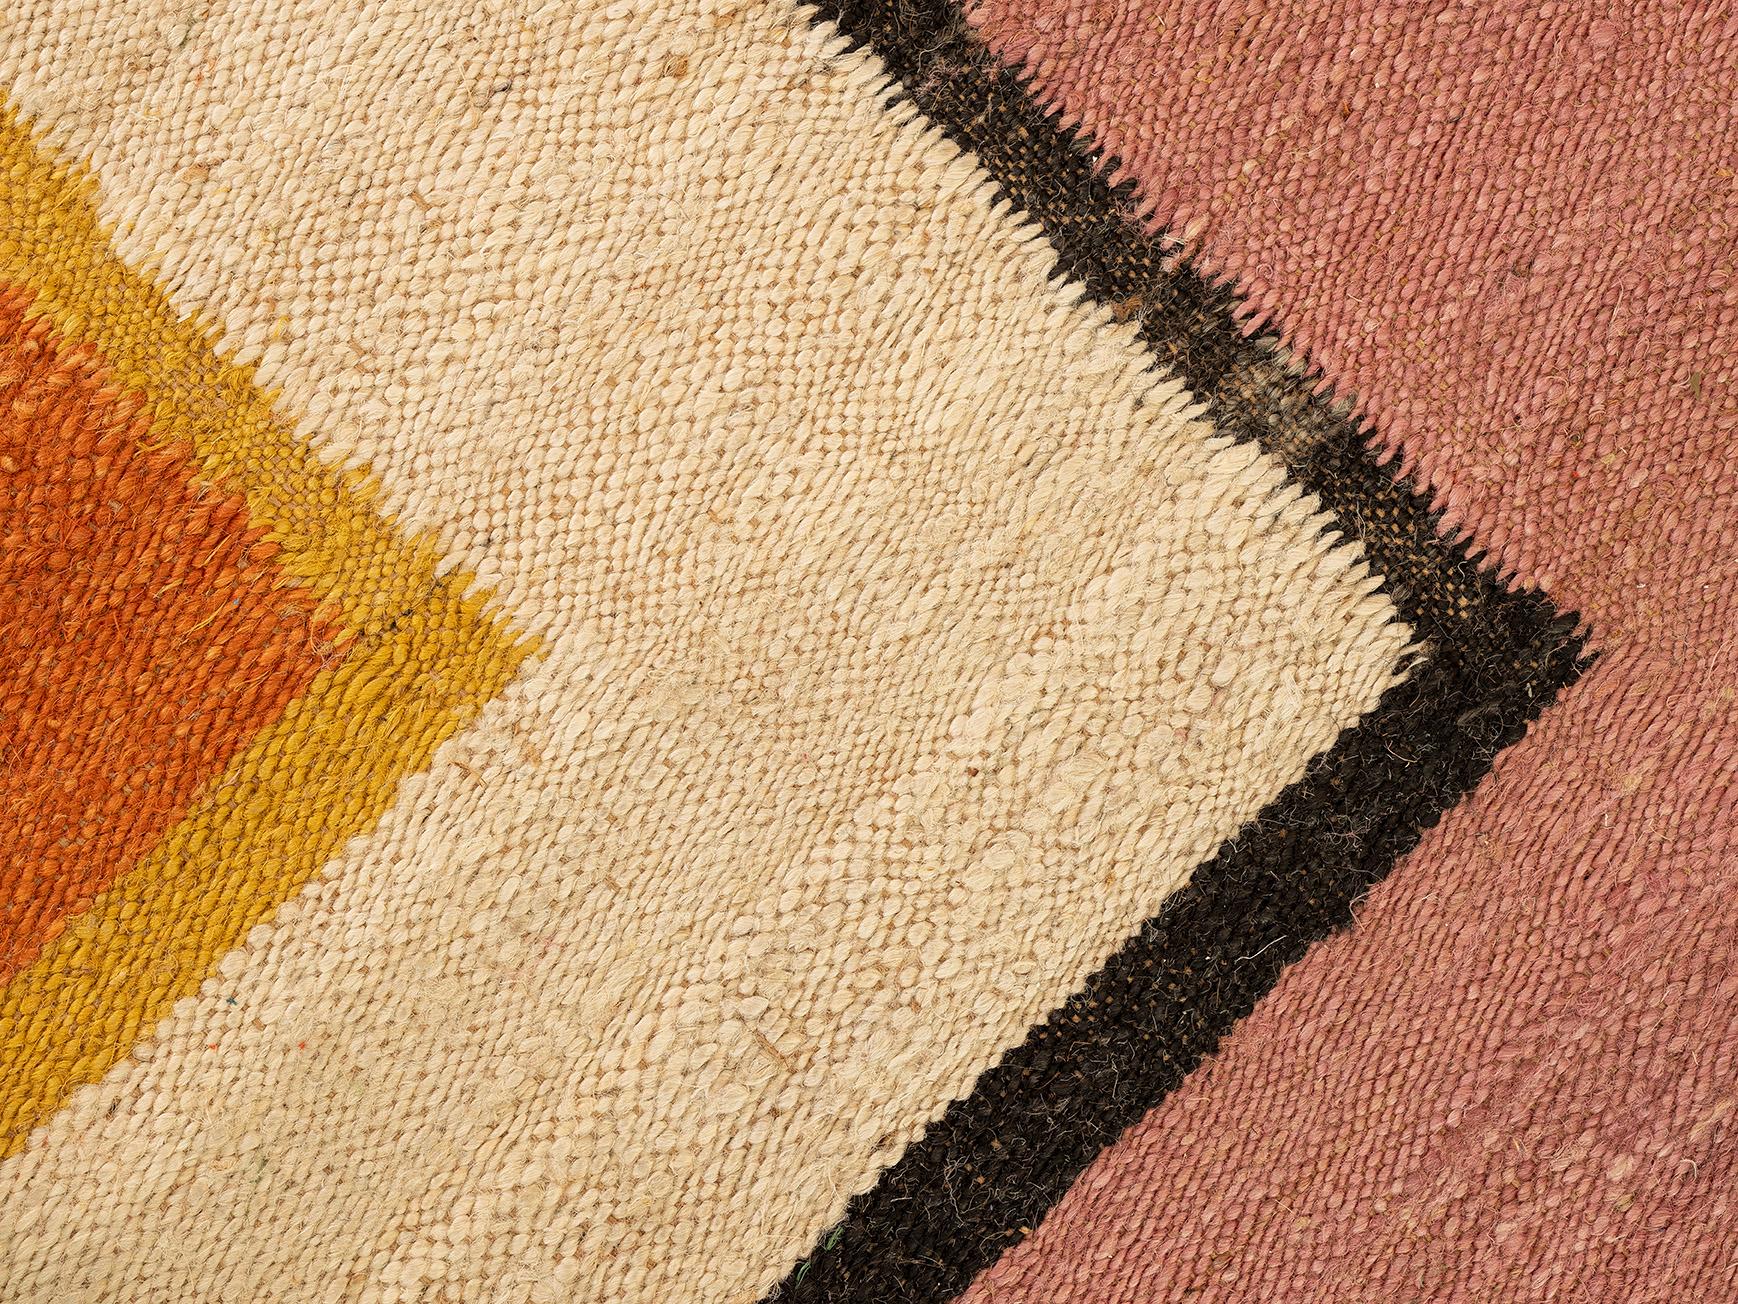 Hand-Woven Modern Handwoven Jute Carpet Rug Kilim in Ivory Black Orange Pink Scrabble For Sale